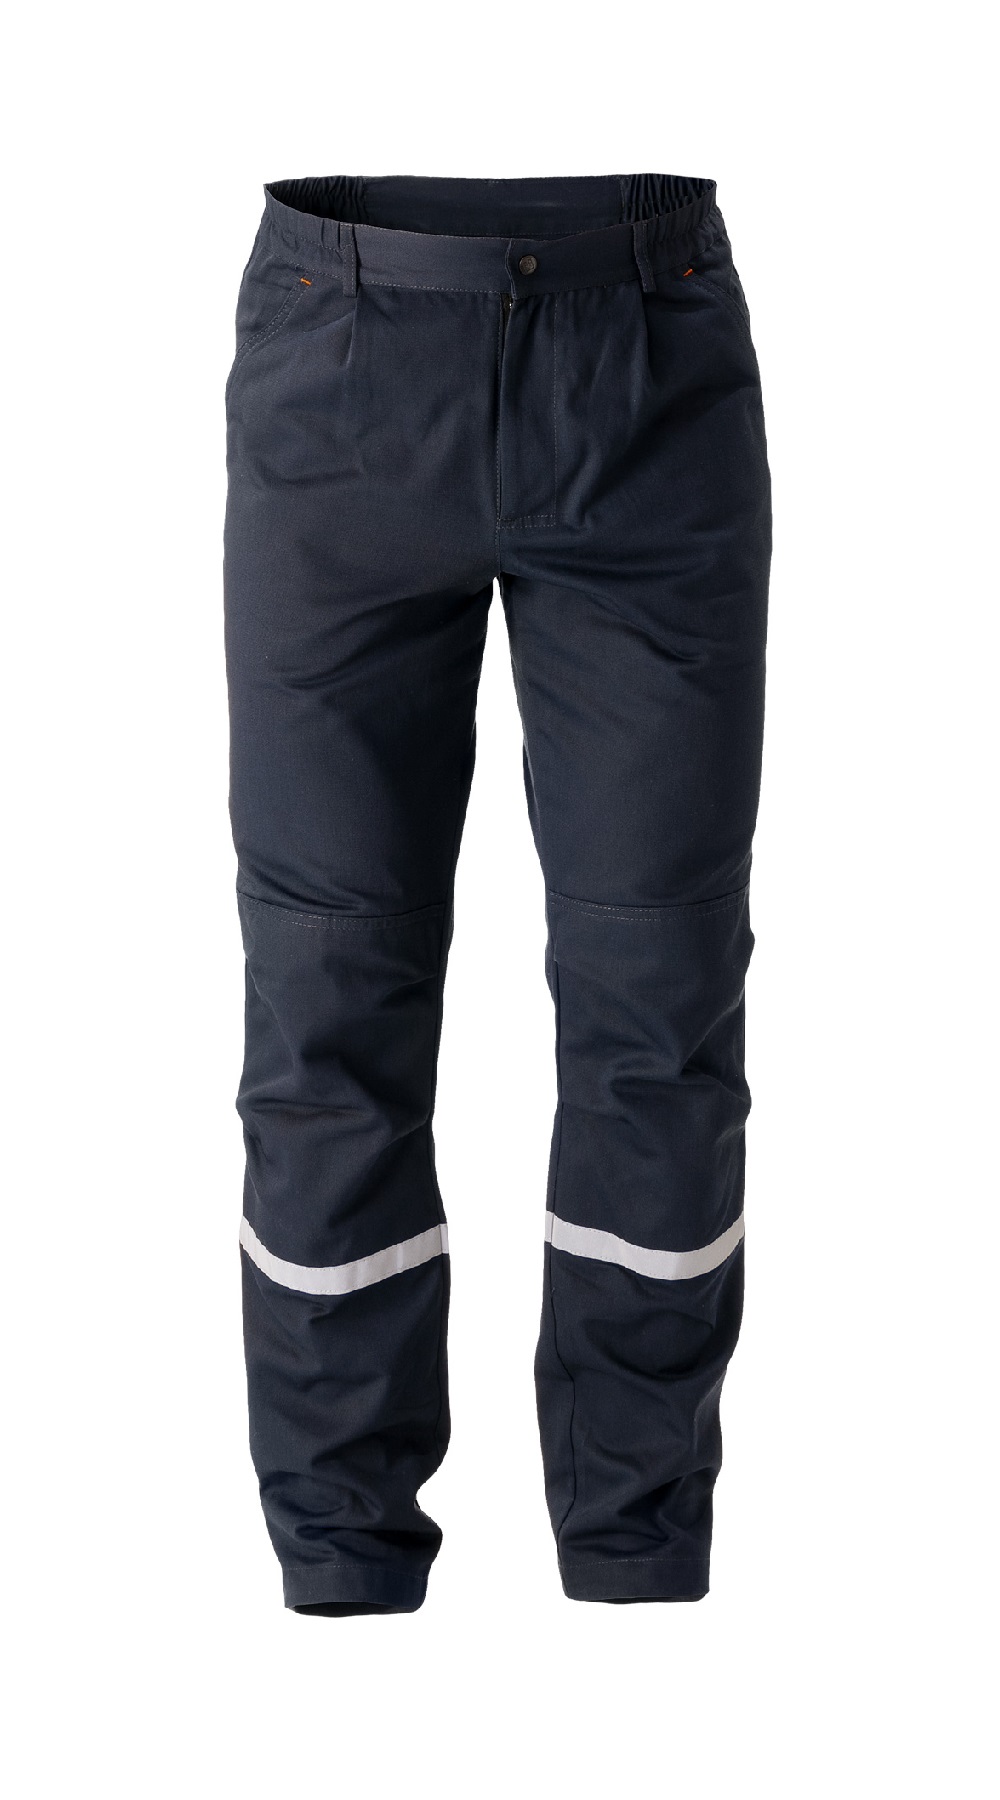 Летние брюки "ТЕХНОЛОГ"  мужские,  цвет:темно - серый, ткань: 100% ХБ